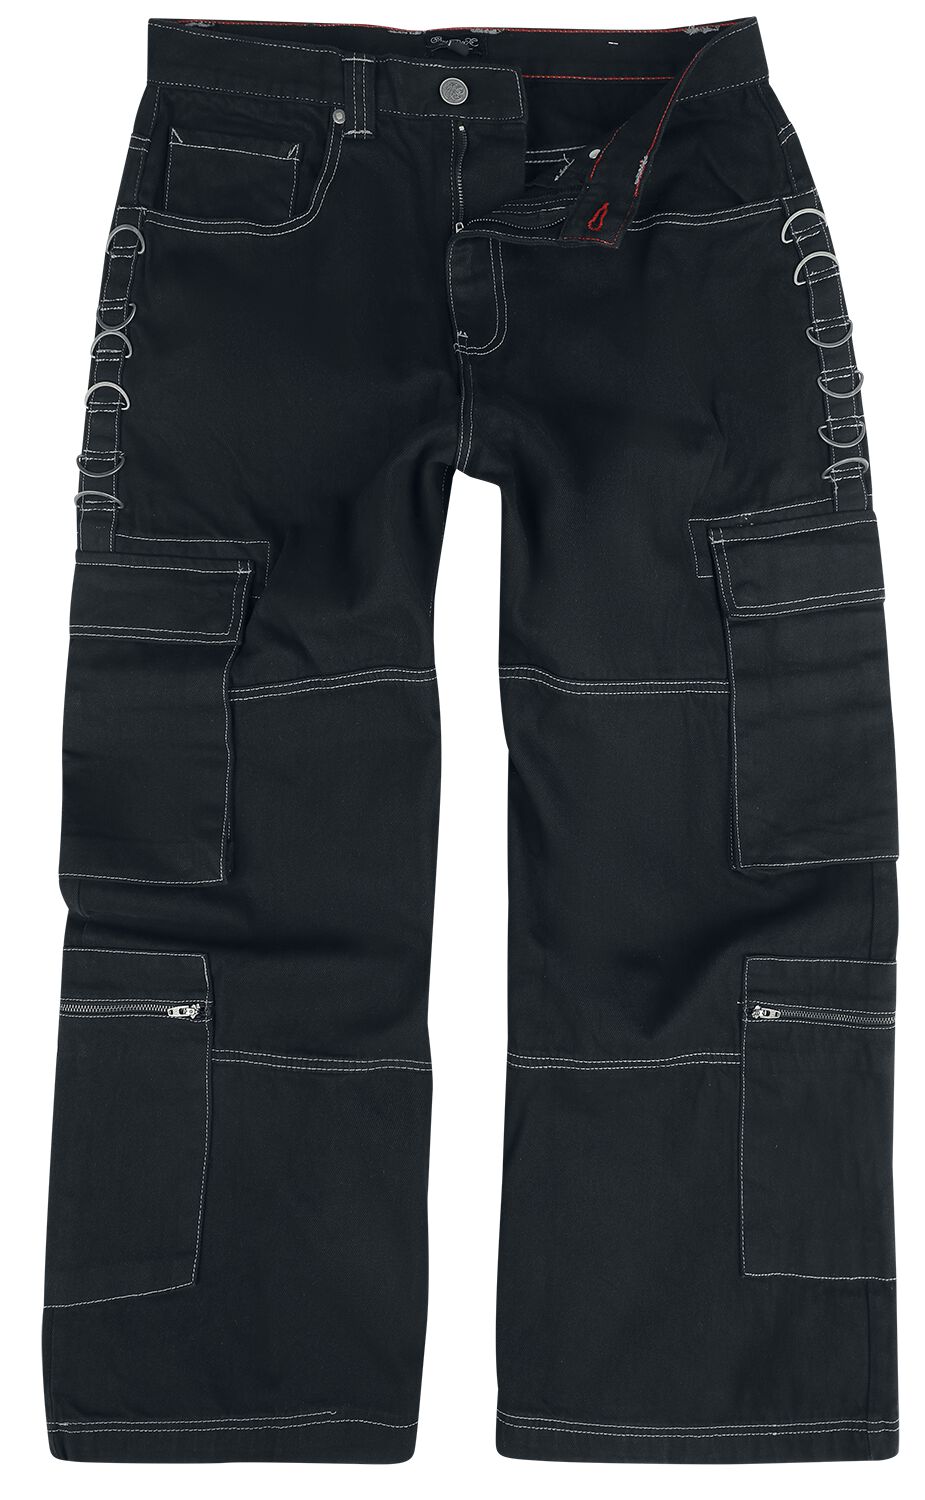 Chet Rock Jeans - Monaghan Utility Jeans - W30L32 bis W38L34 - für Männer - Größe W38L34 - schwarz